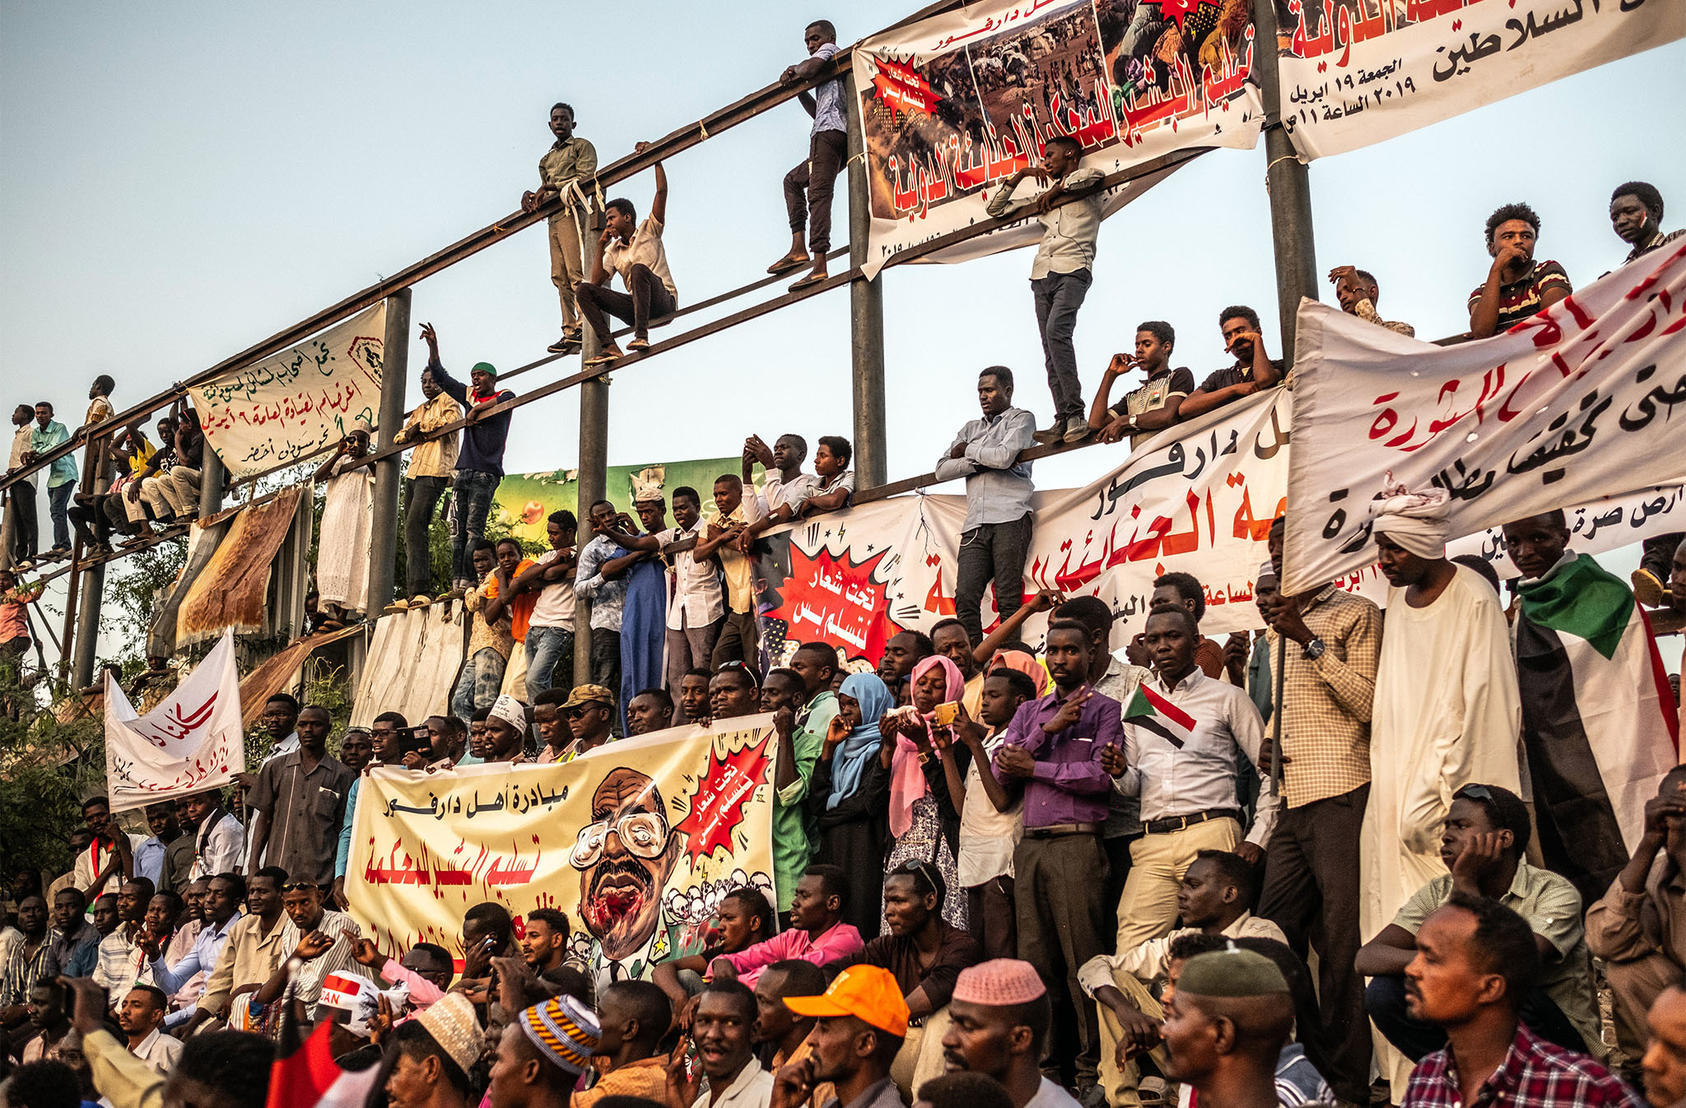 Protesters against former Sudanese President Omar al-Bashir in Khartoum, Sudan. April 19, 2019 (Bryan Denton/The New York Times)